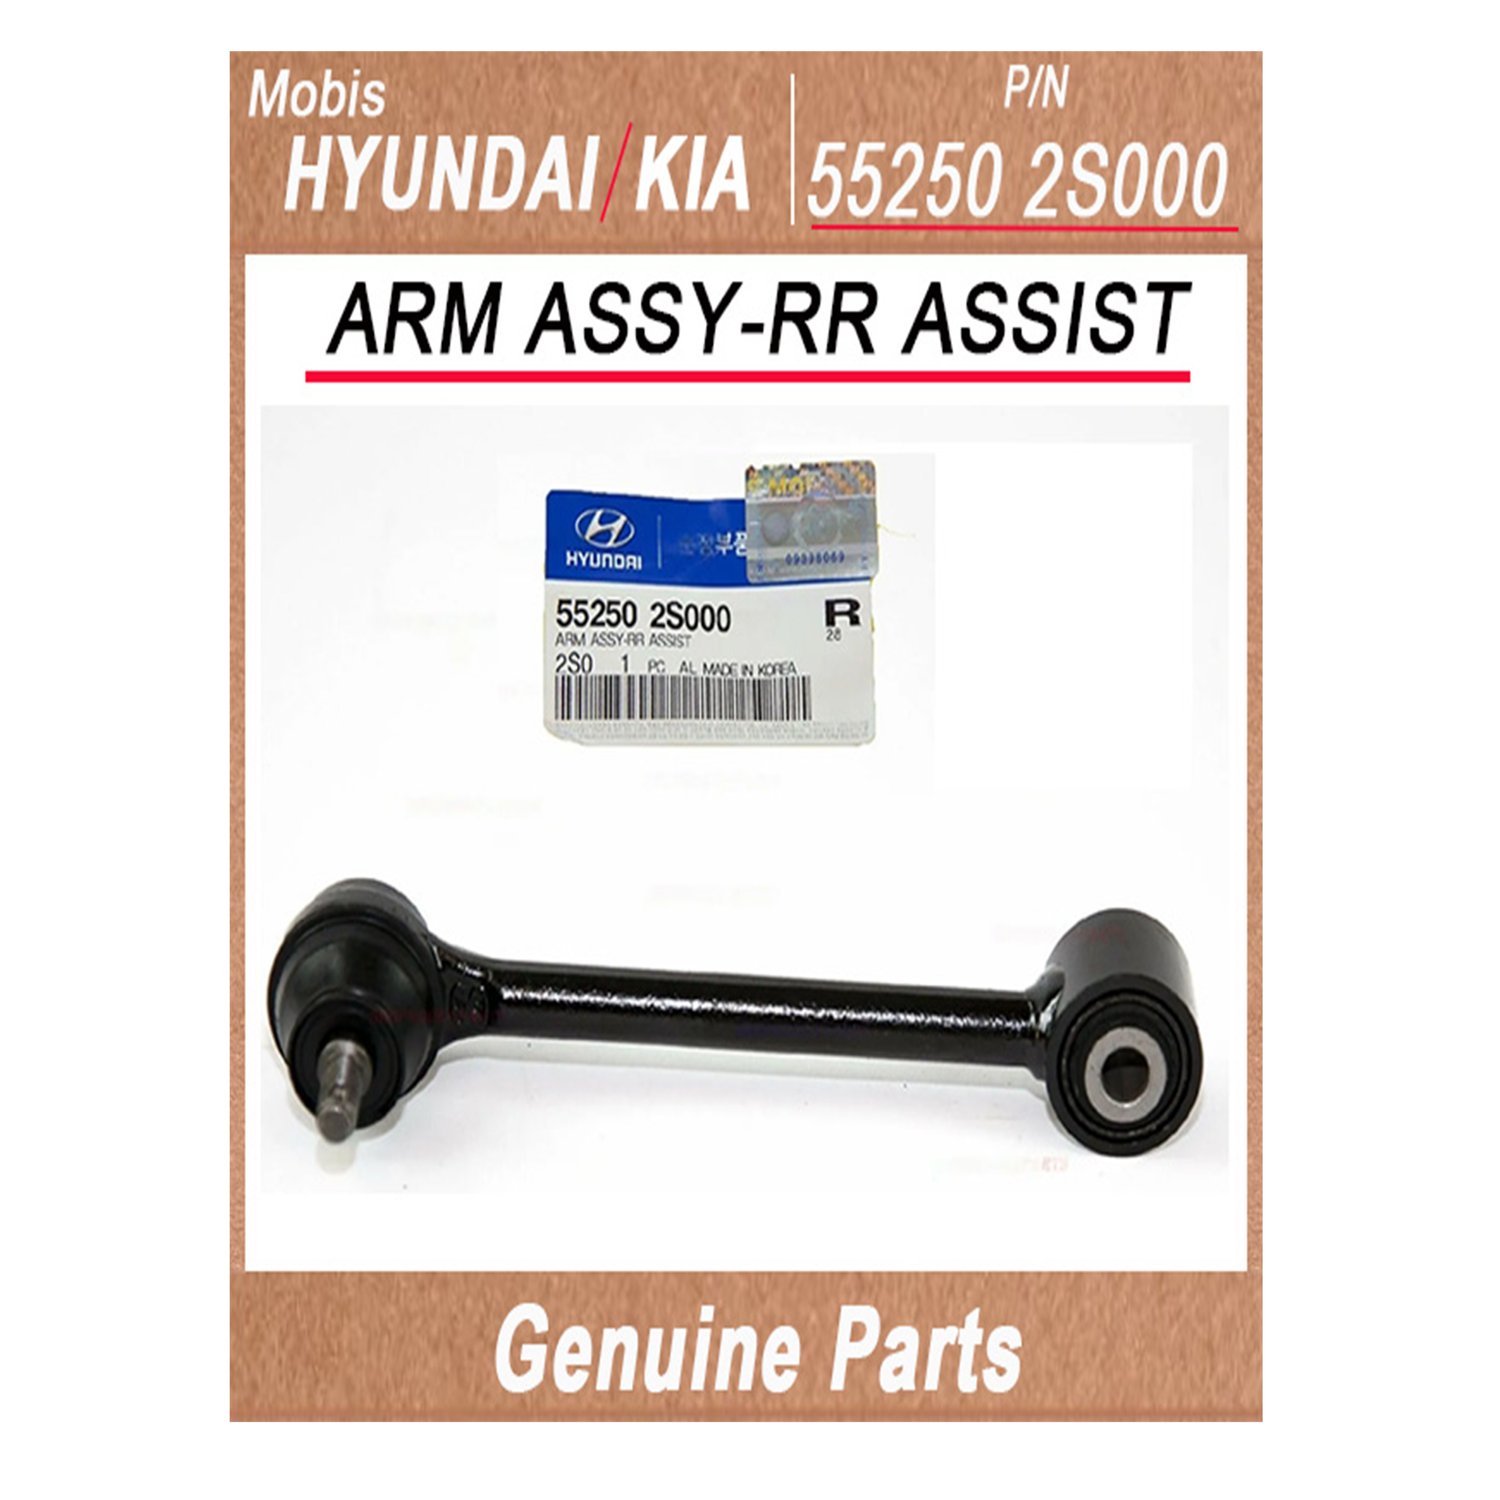 552502S000 _ ARM ASSY_RR ASSIST _ Genuine Korean Automotive Spare Parts _ Hyundai Kia _Mobis_